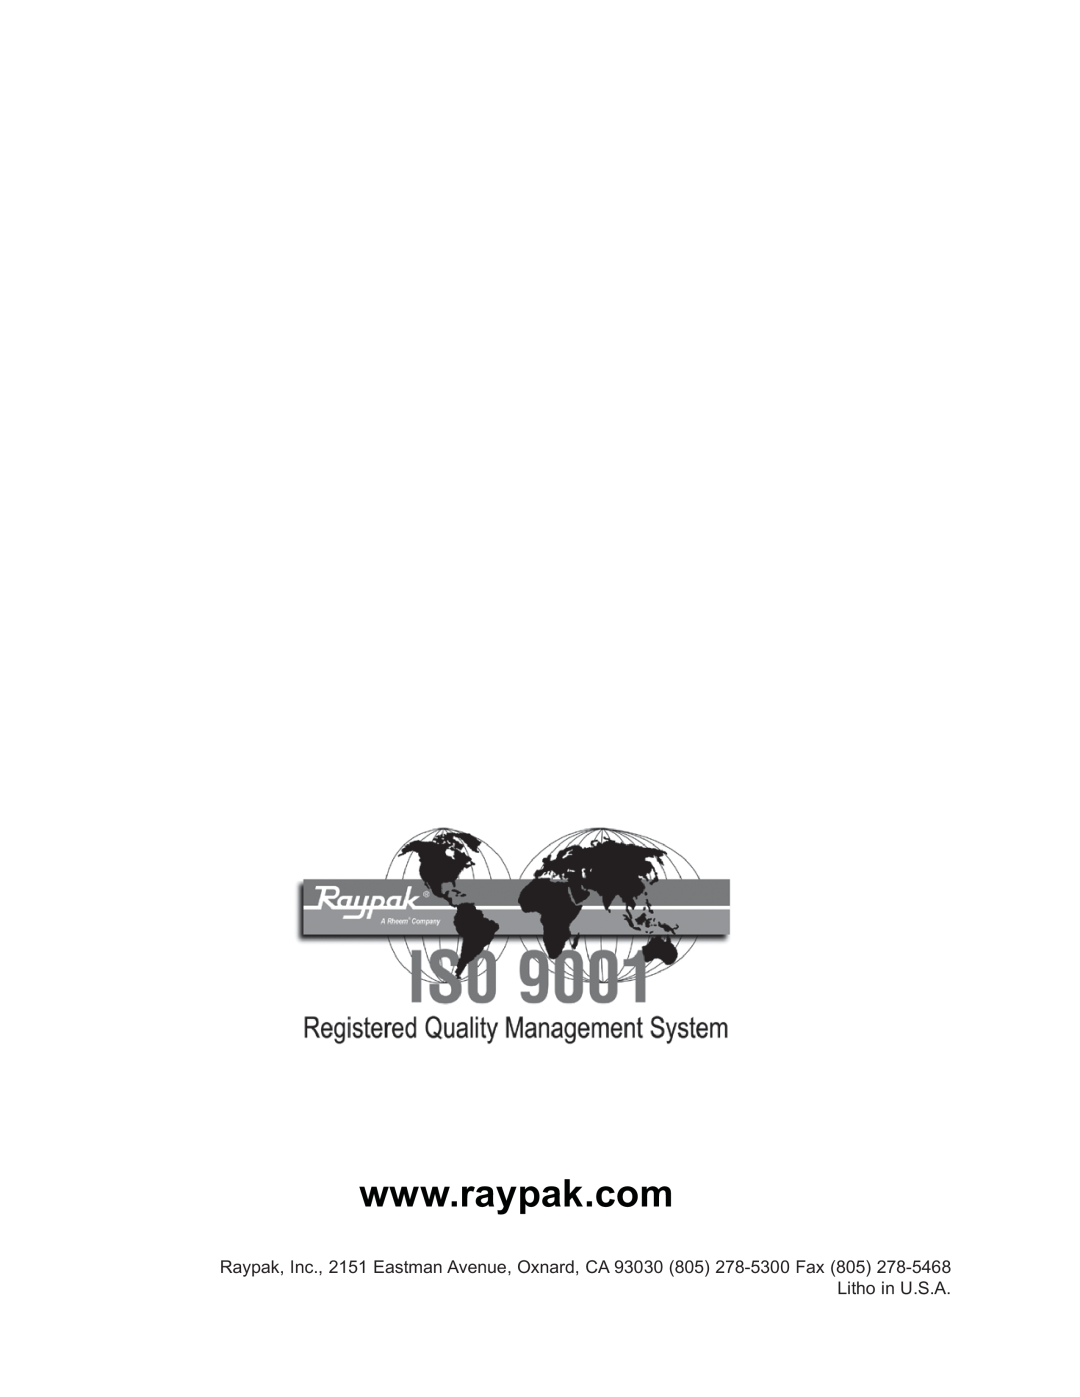 Raypak Y-200 manual 